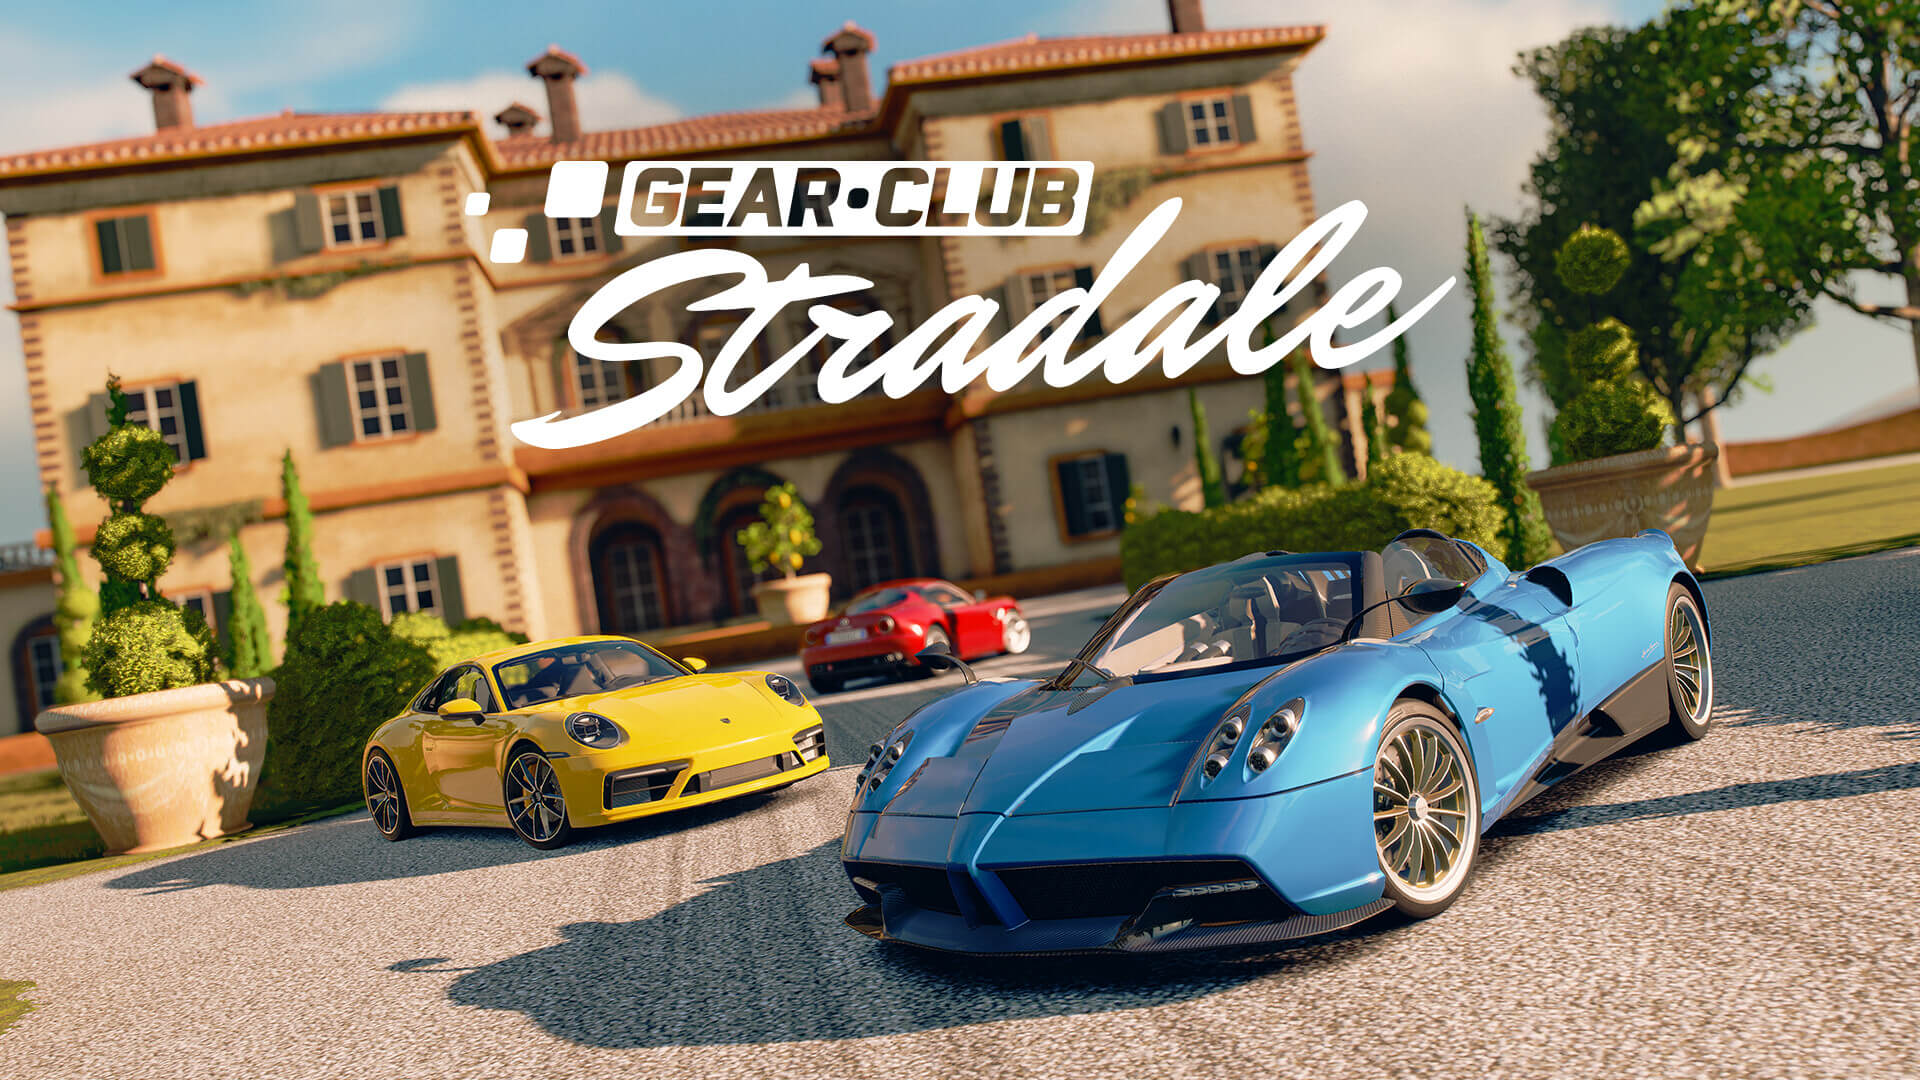 Gear.Club Stradale for windows download